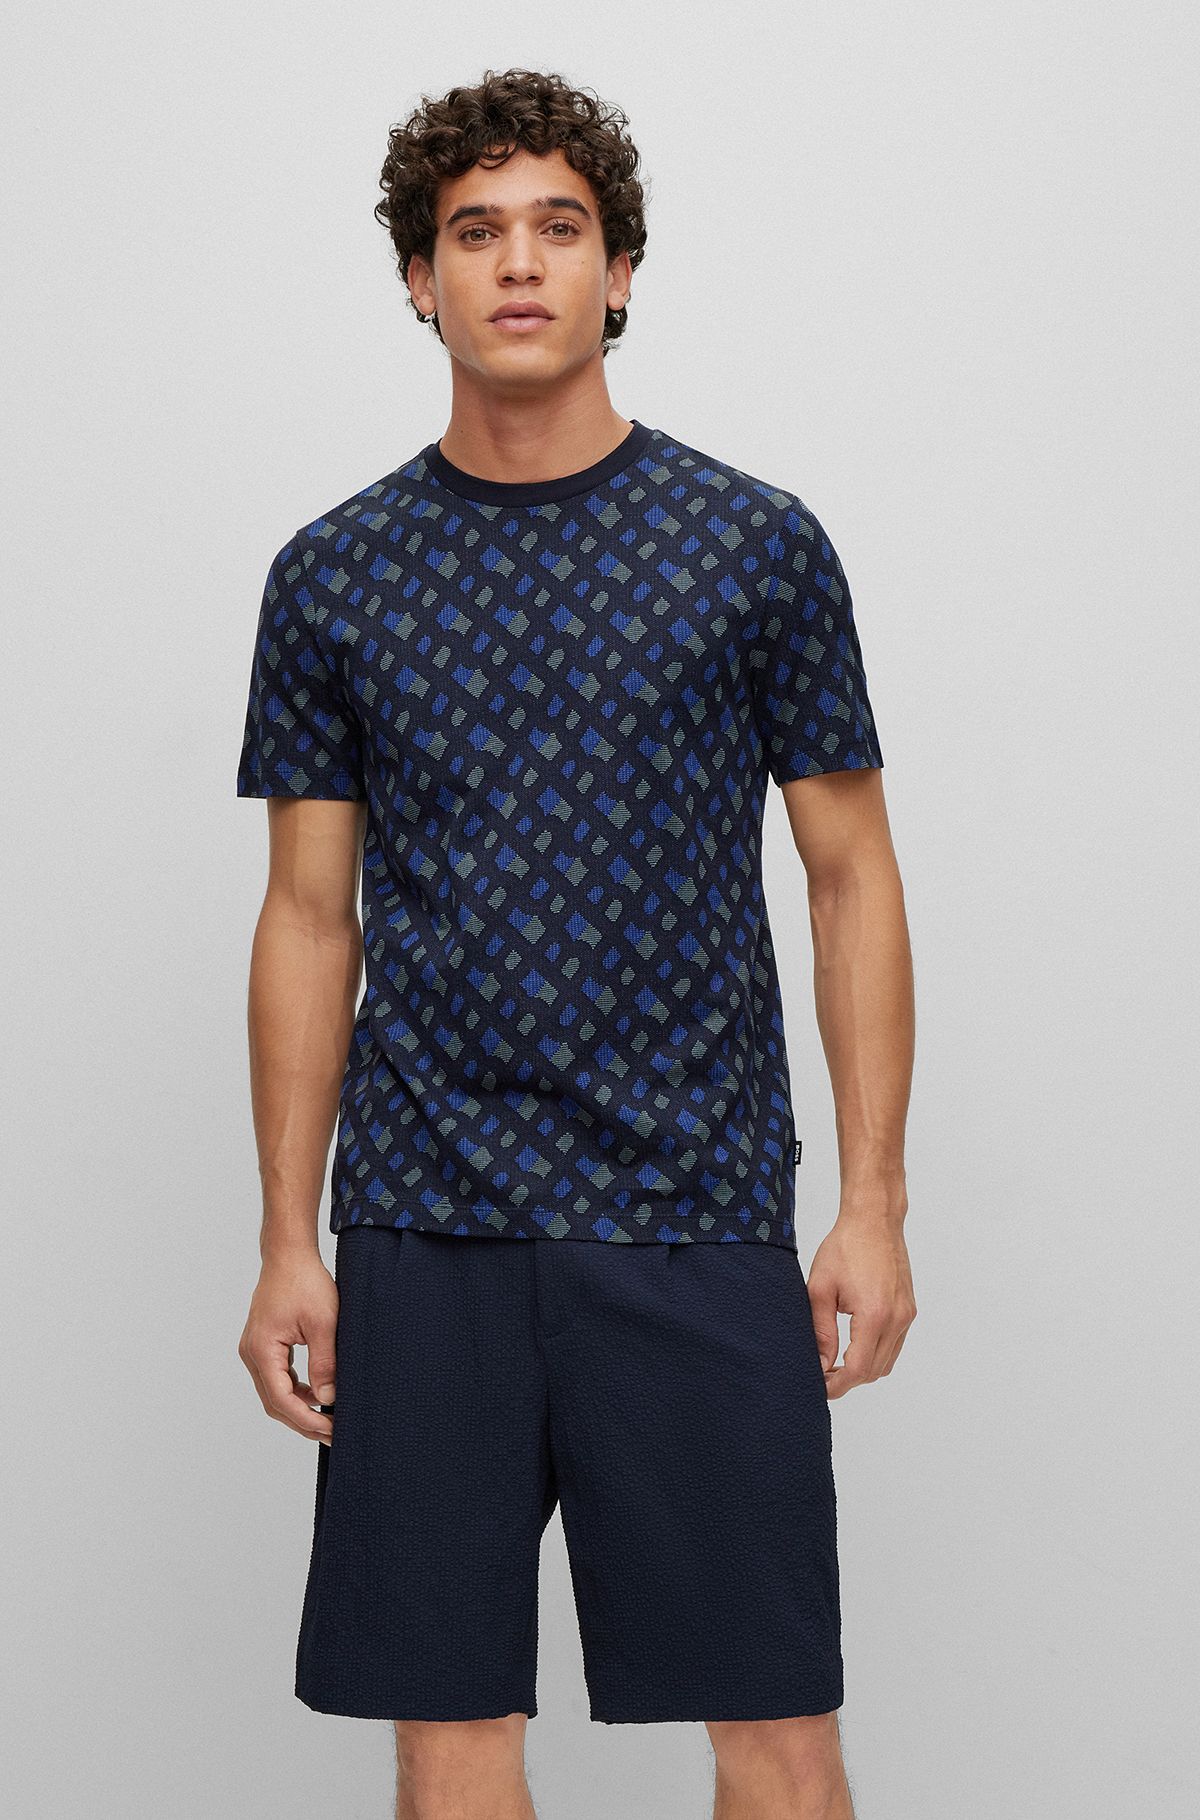 Louis Vuitton Planet Logo T Shirt Brand New Size S